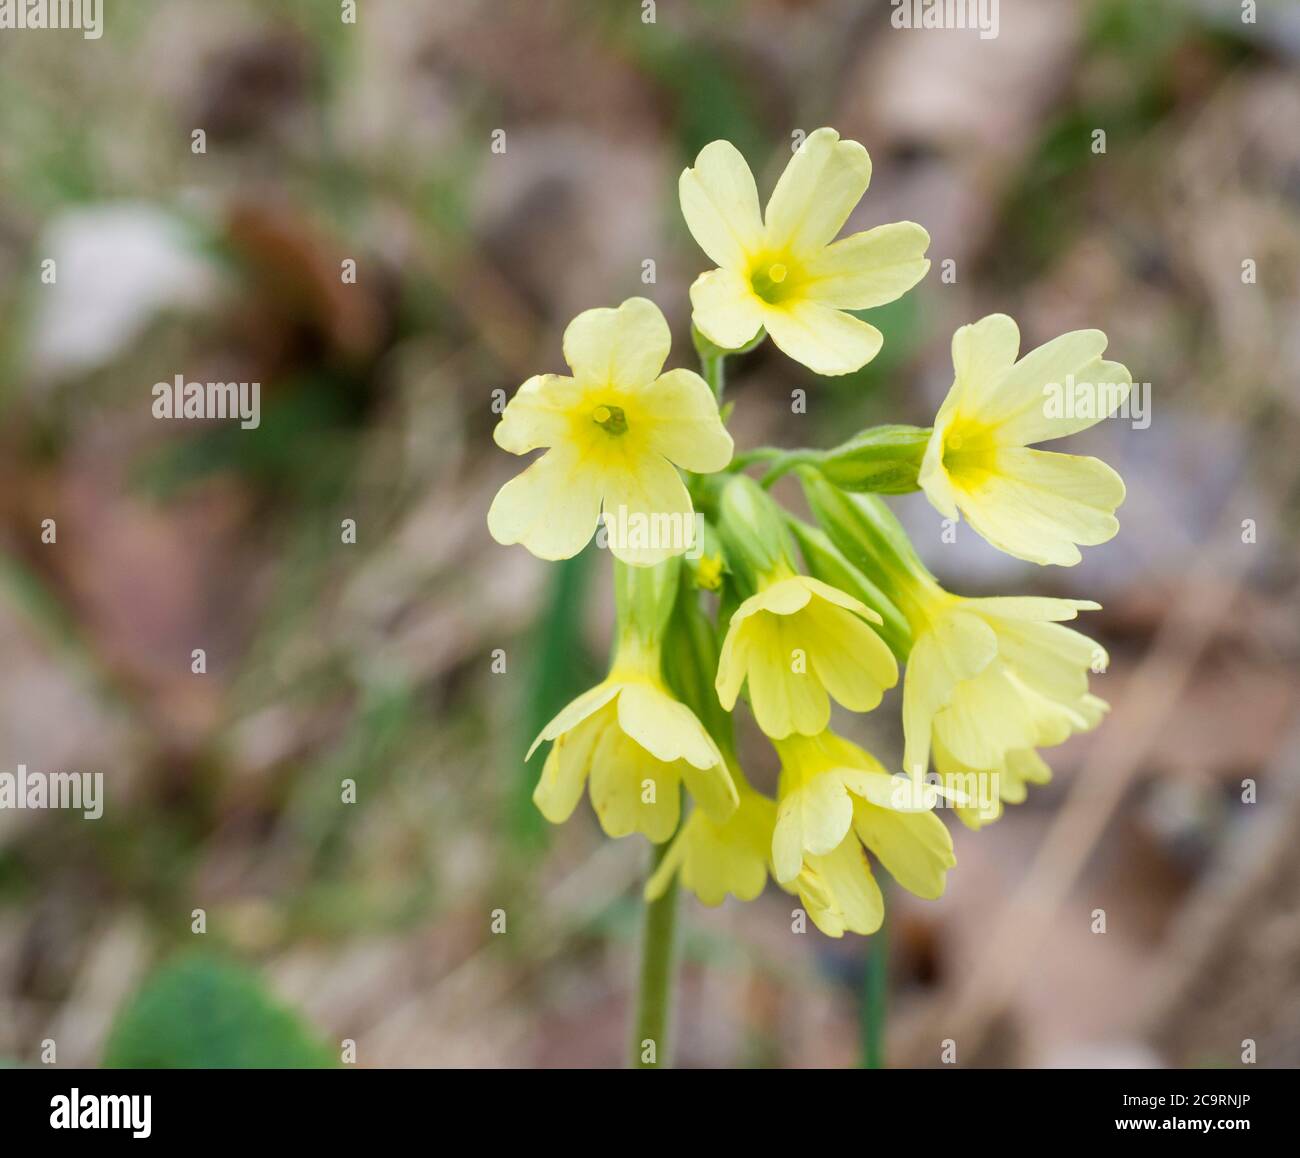 Yellow Primula Vulgaris Stockfotos und -bilder Kaufen - Alamy